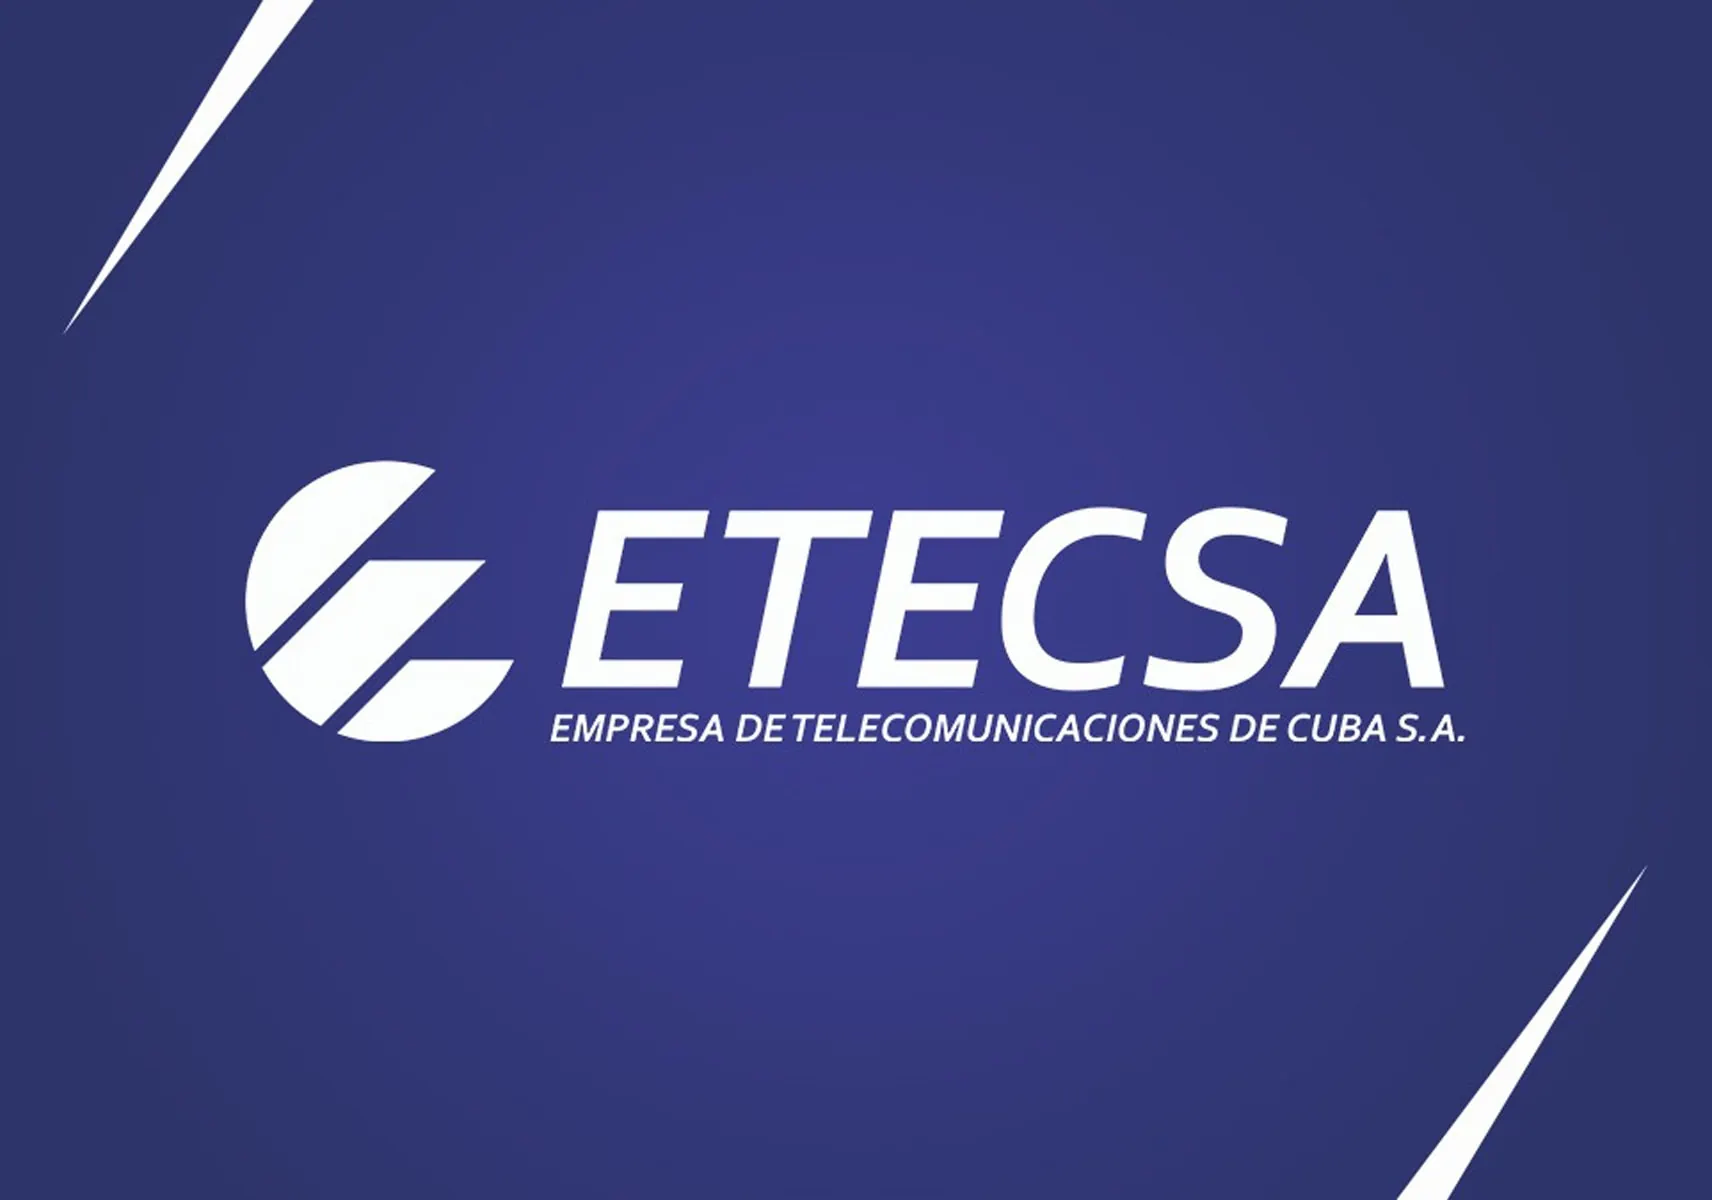 ¡Atención! Corte de Internet en Cuba: ETECSA Informa